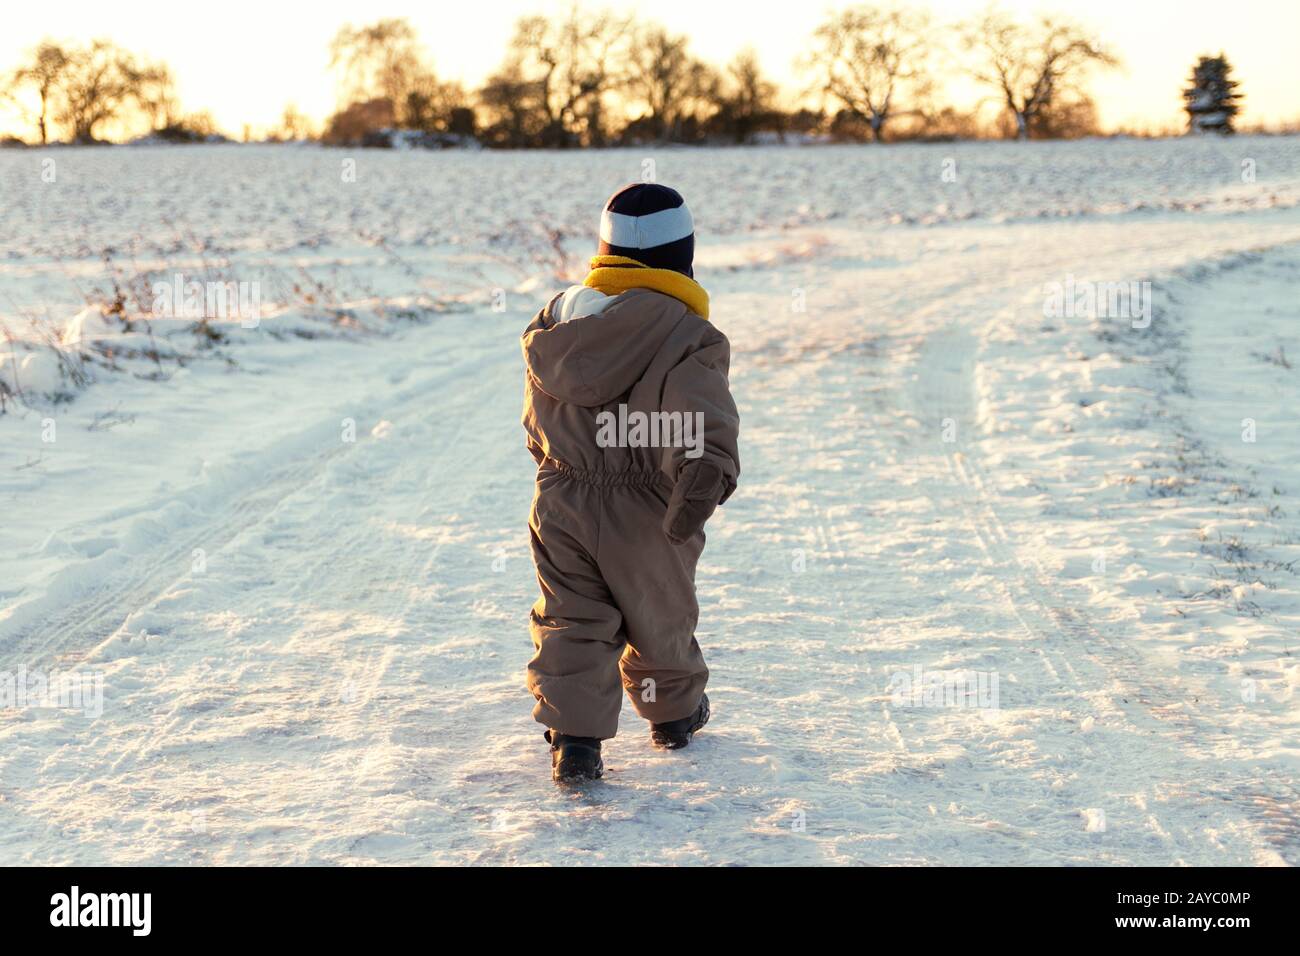 Little toddler walking outdoors in a snowy winter scene. Stock Photo